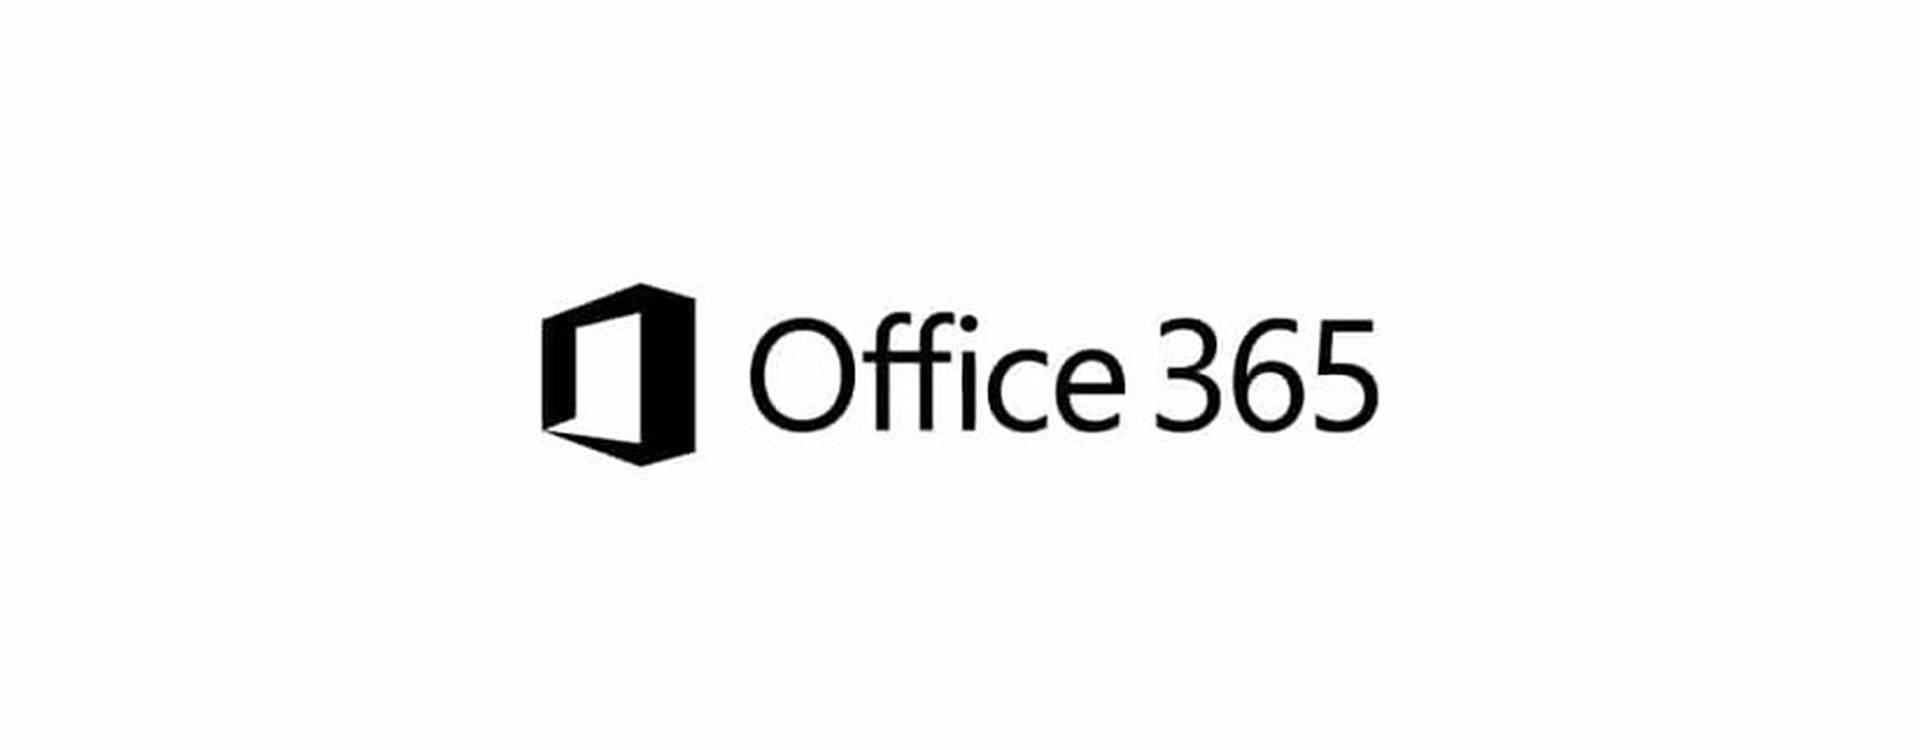 Office 365 Monochrome Background